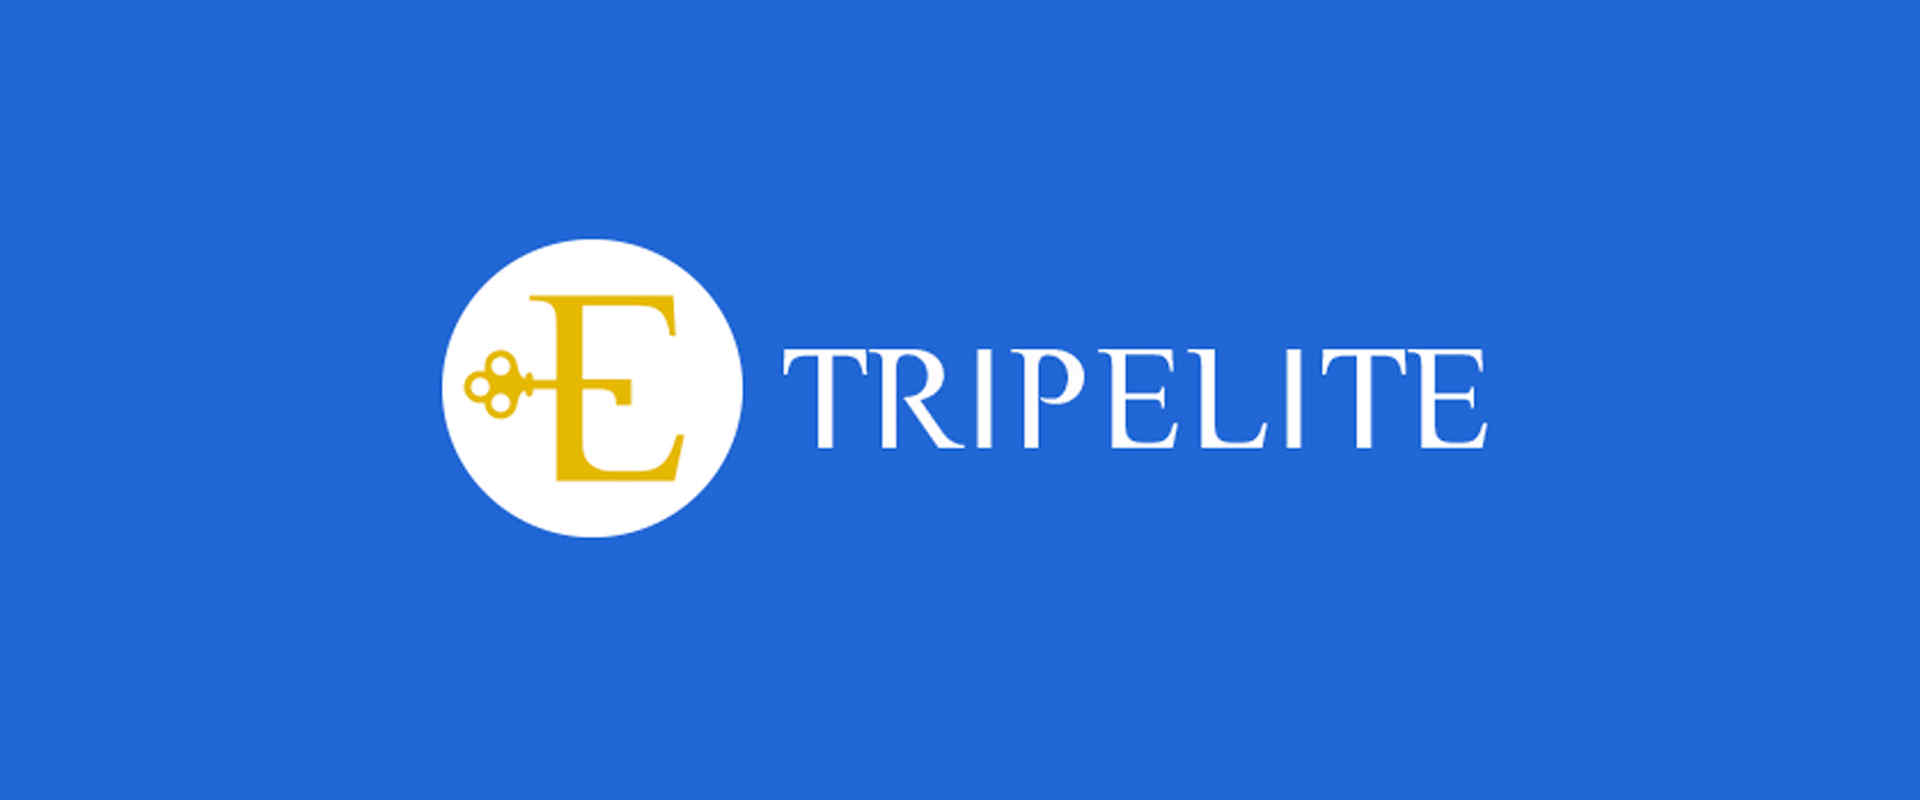 tripelite01